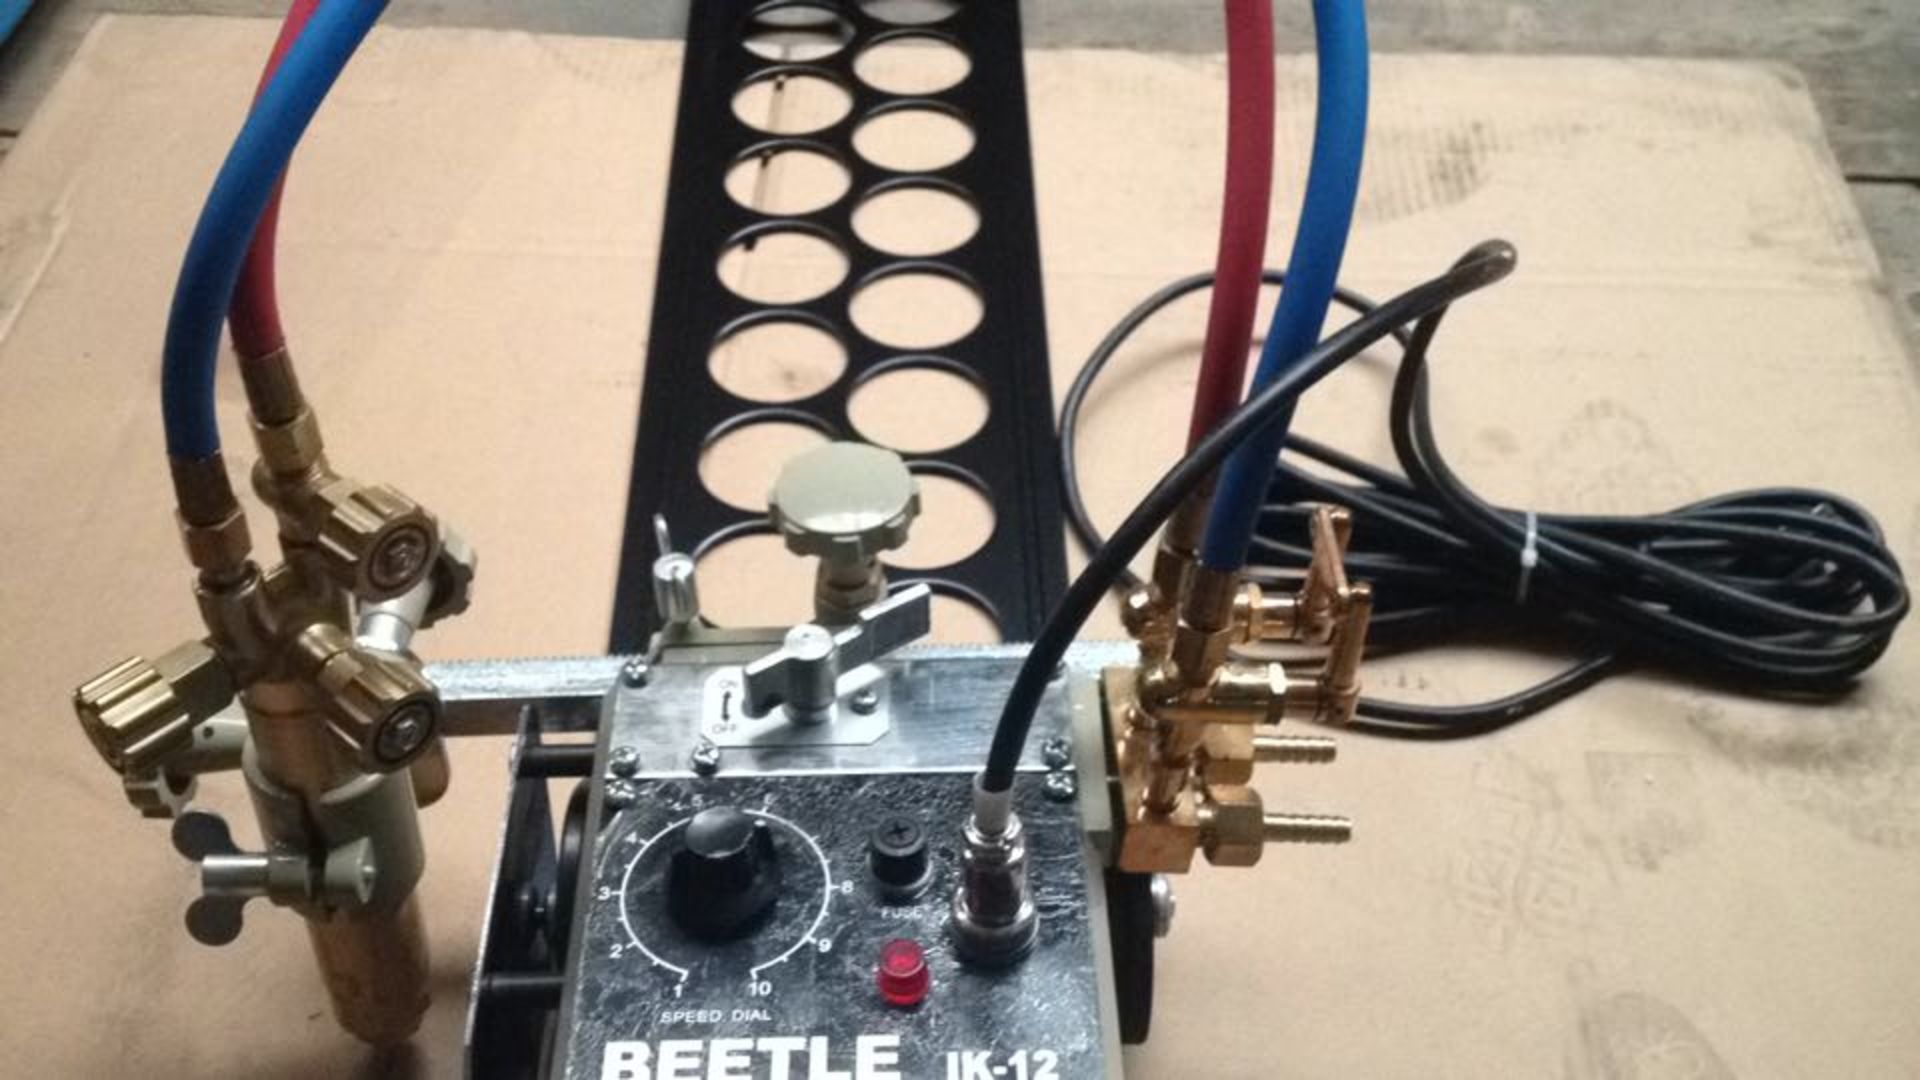 Beetle model IK-12 Portable Oxy-Fuel Cutting Machine / Gas Cutter style machine, 4" cutting - Image 2 of 2